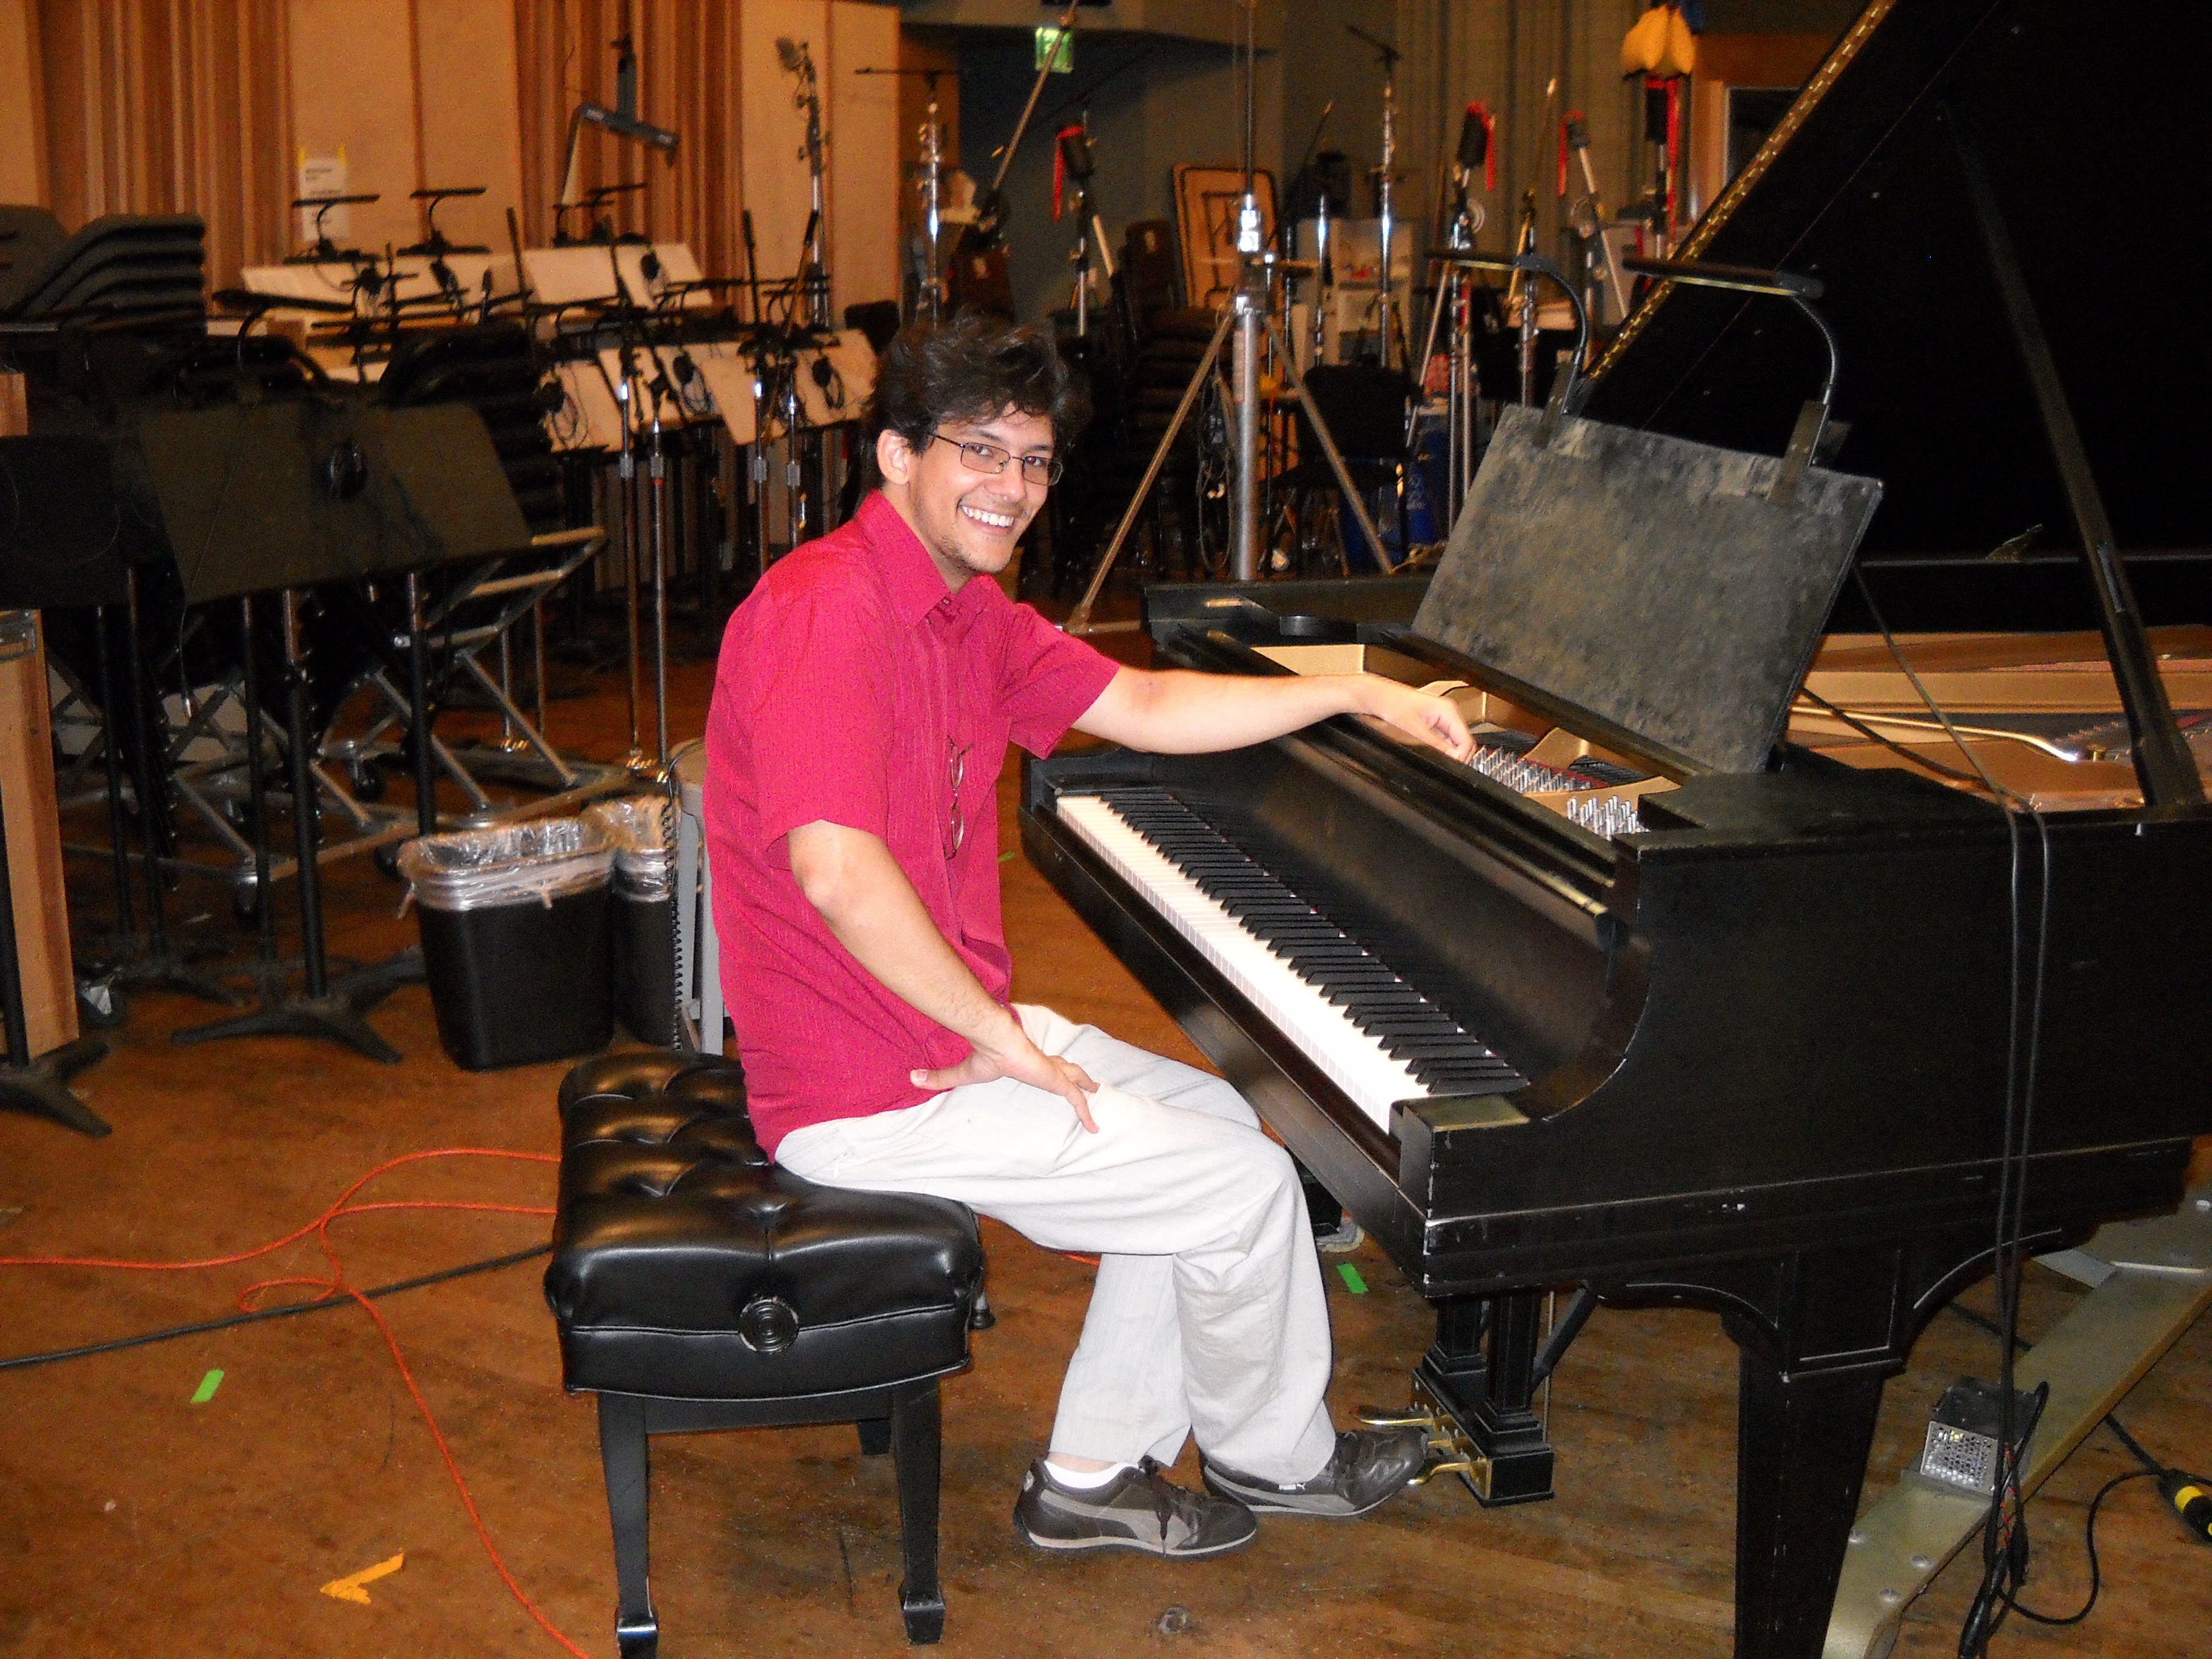 Jehan Stefan at The Newman Scoring Stage, 20th Century Fox Studios, Century City, CA